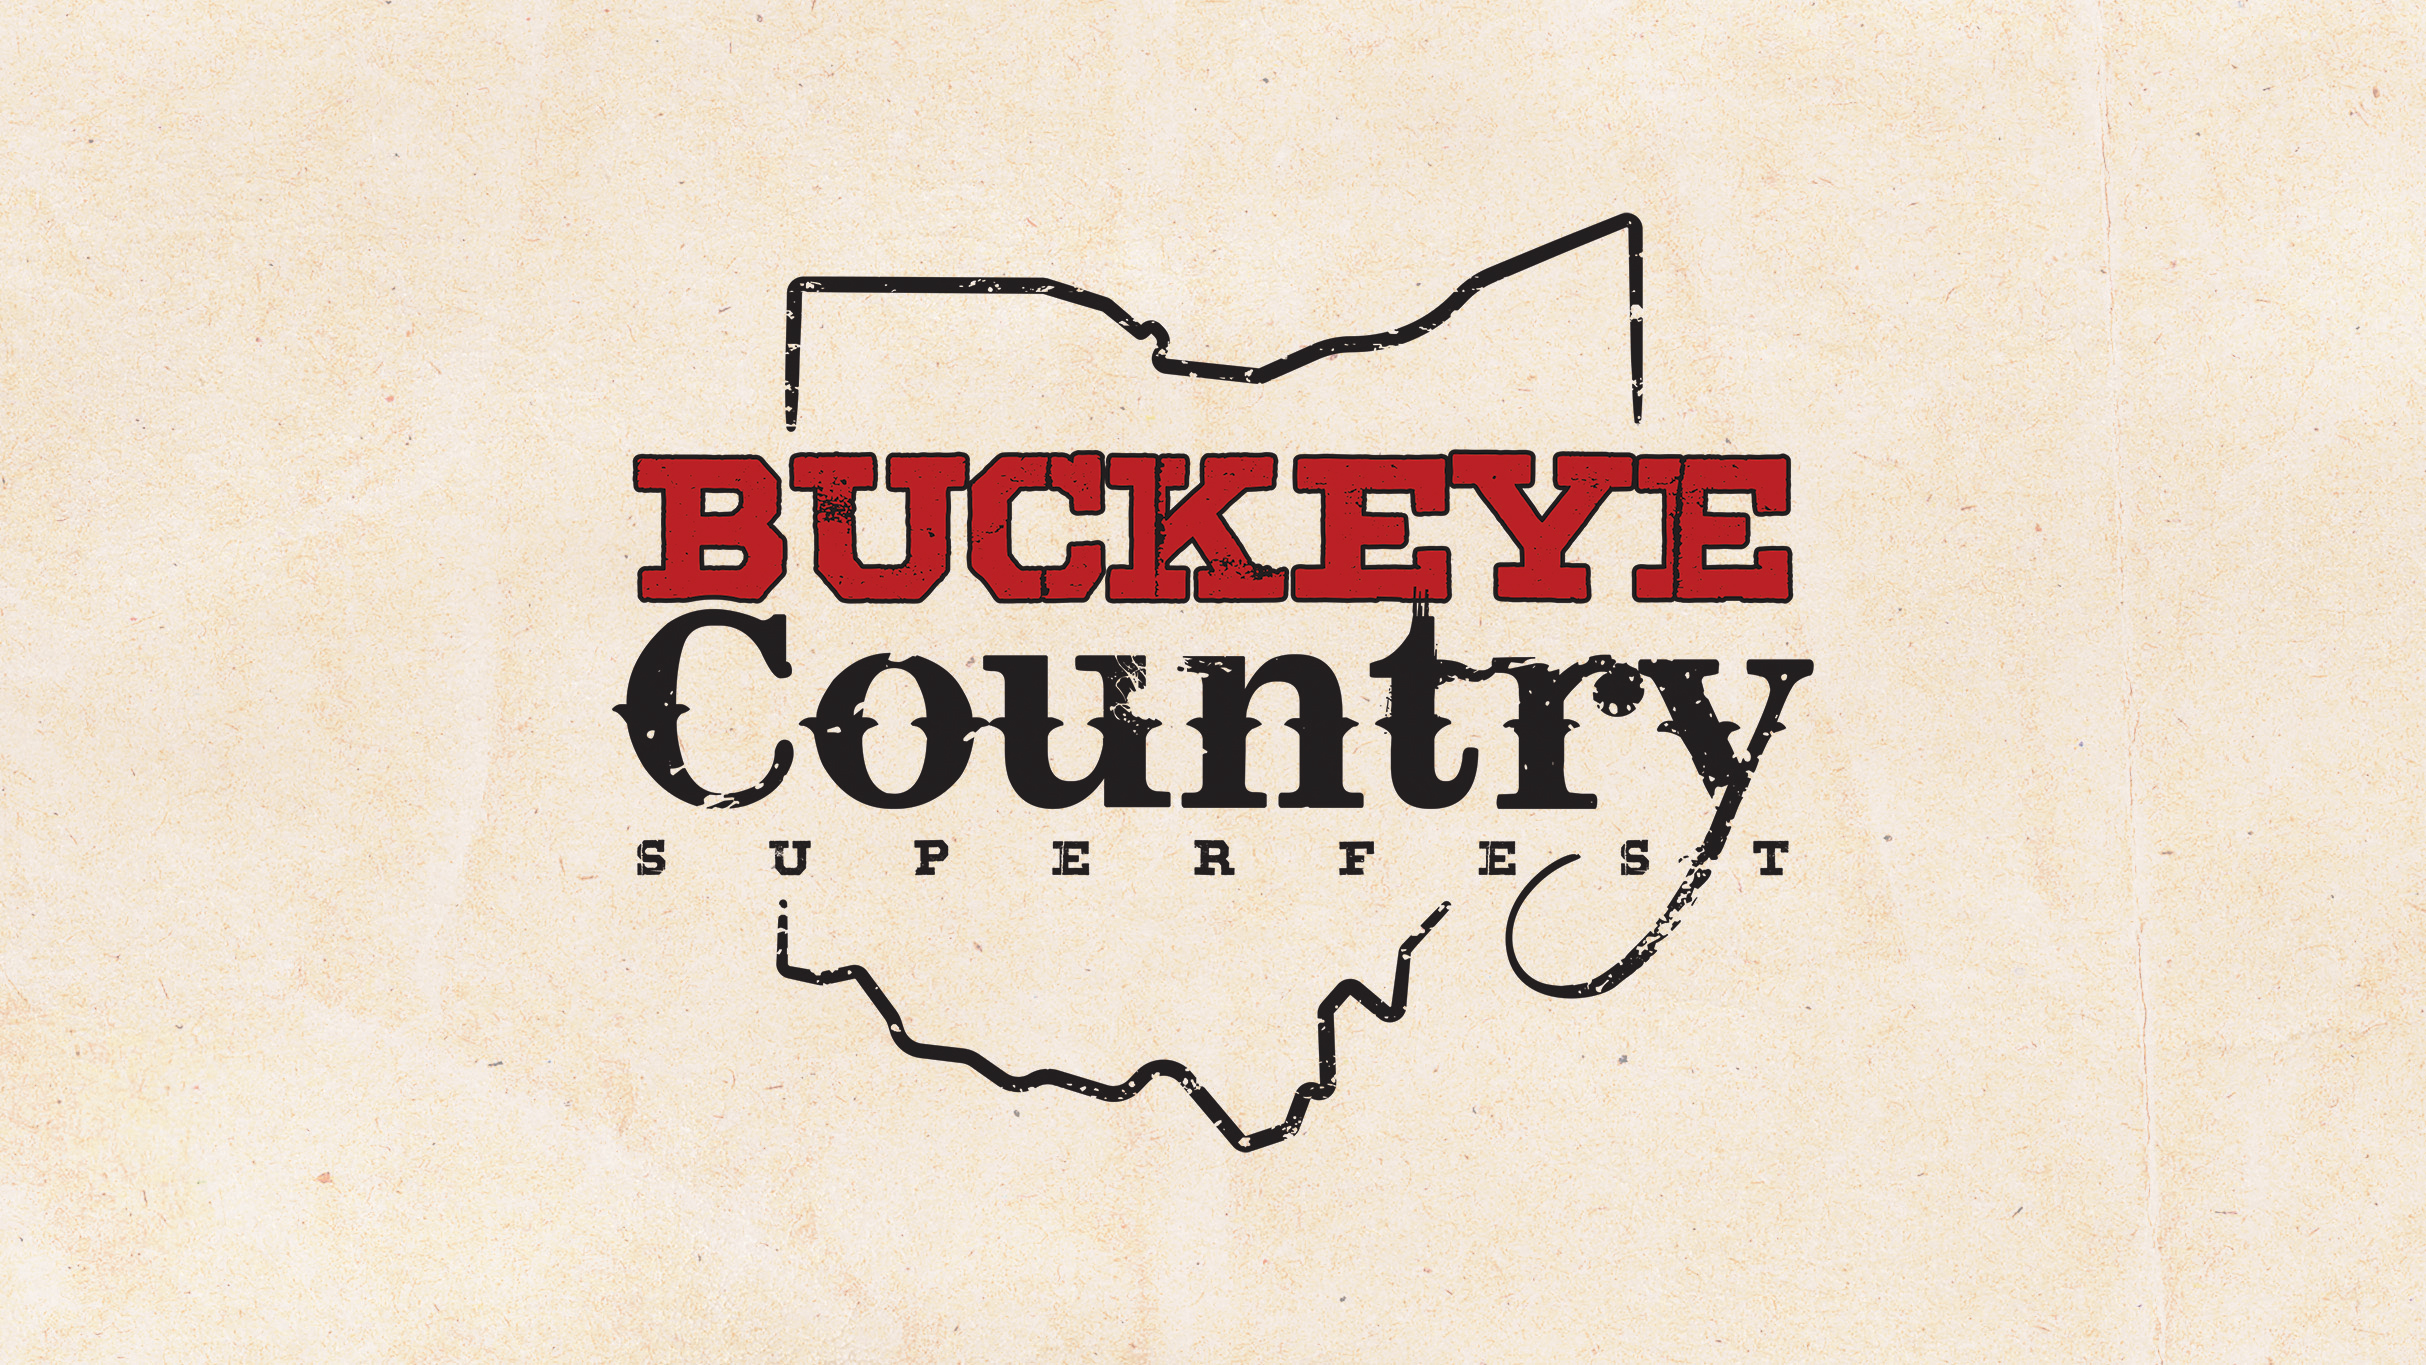 Buckeye Country Superfest starring Zach Bryan *PARKING*